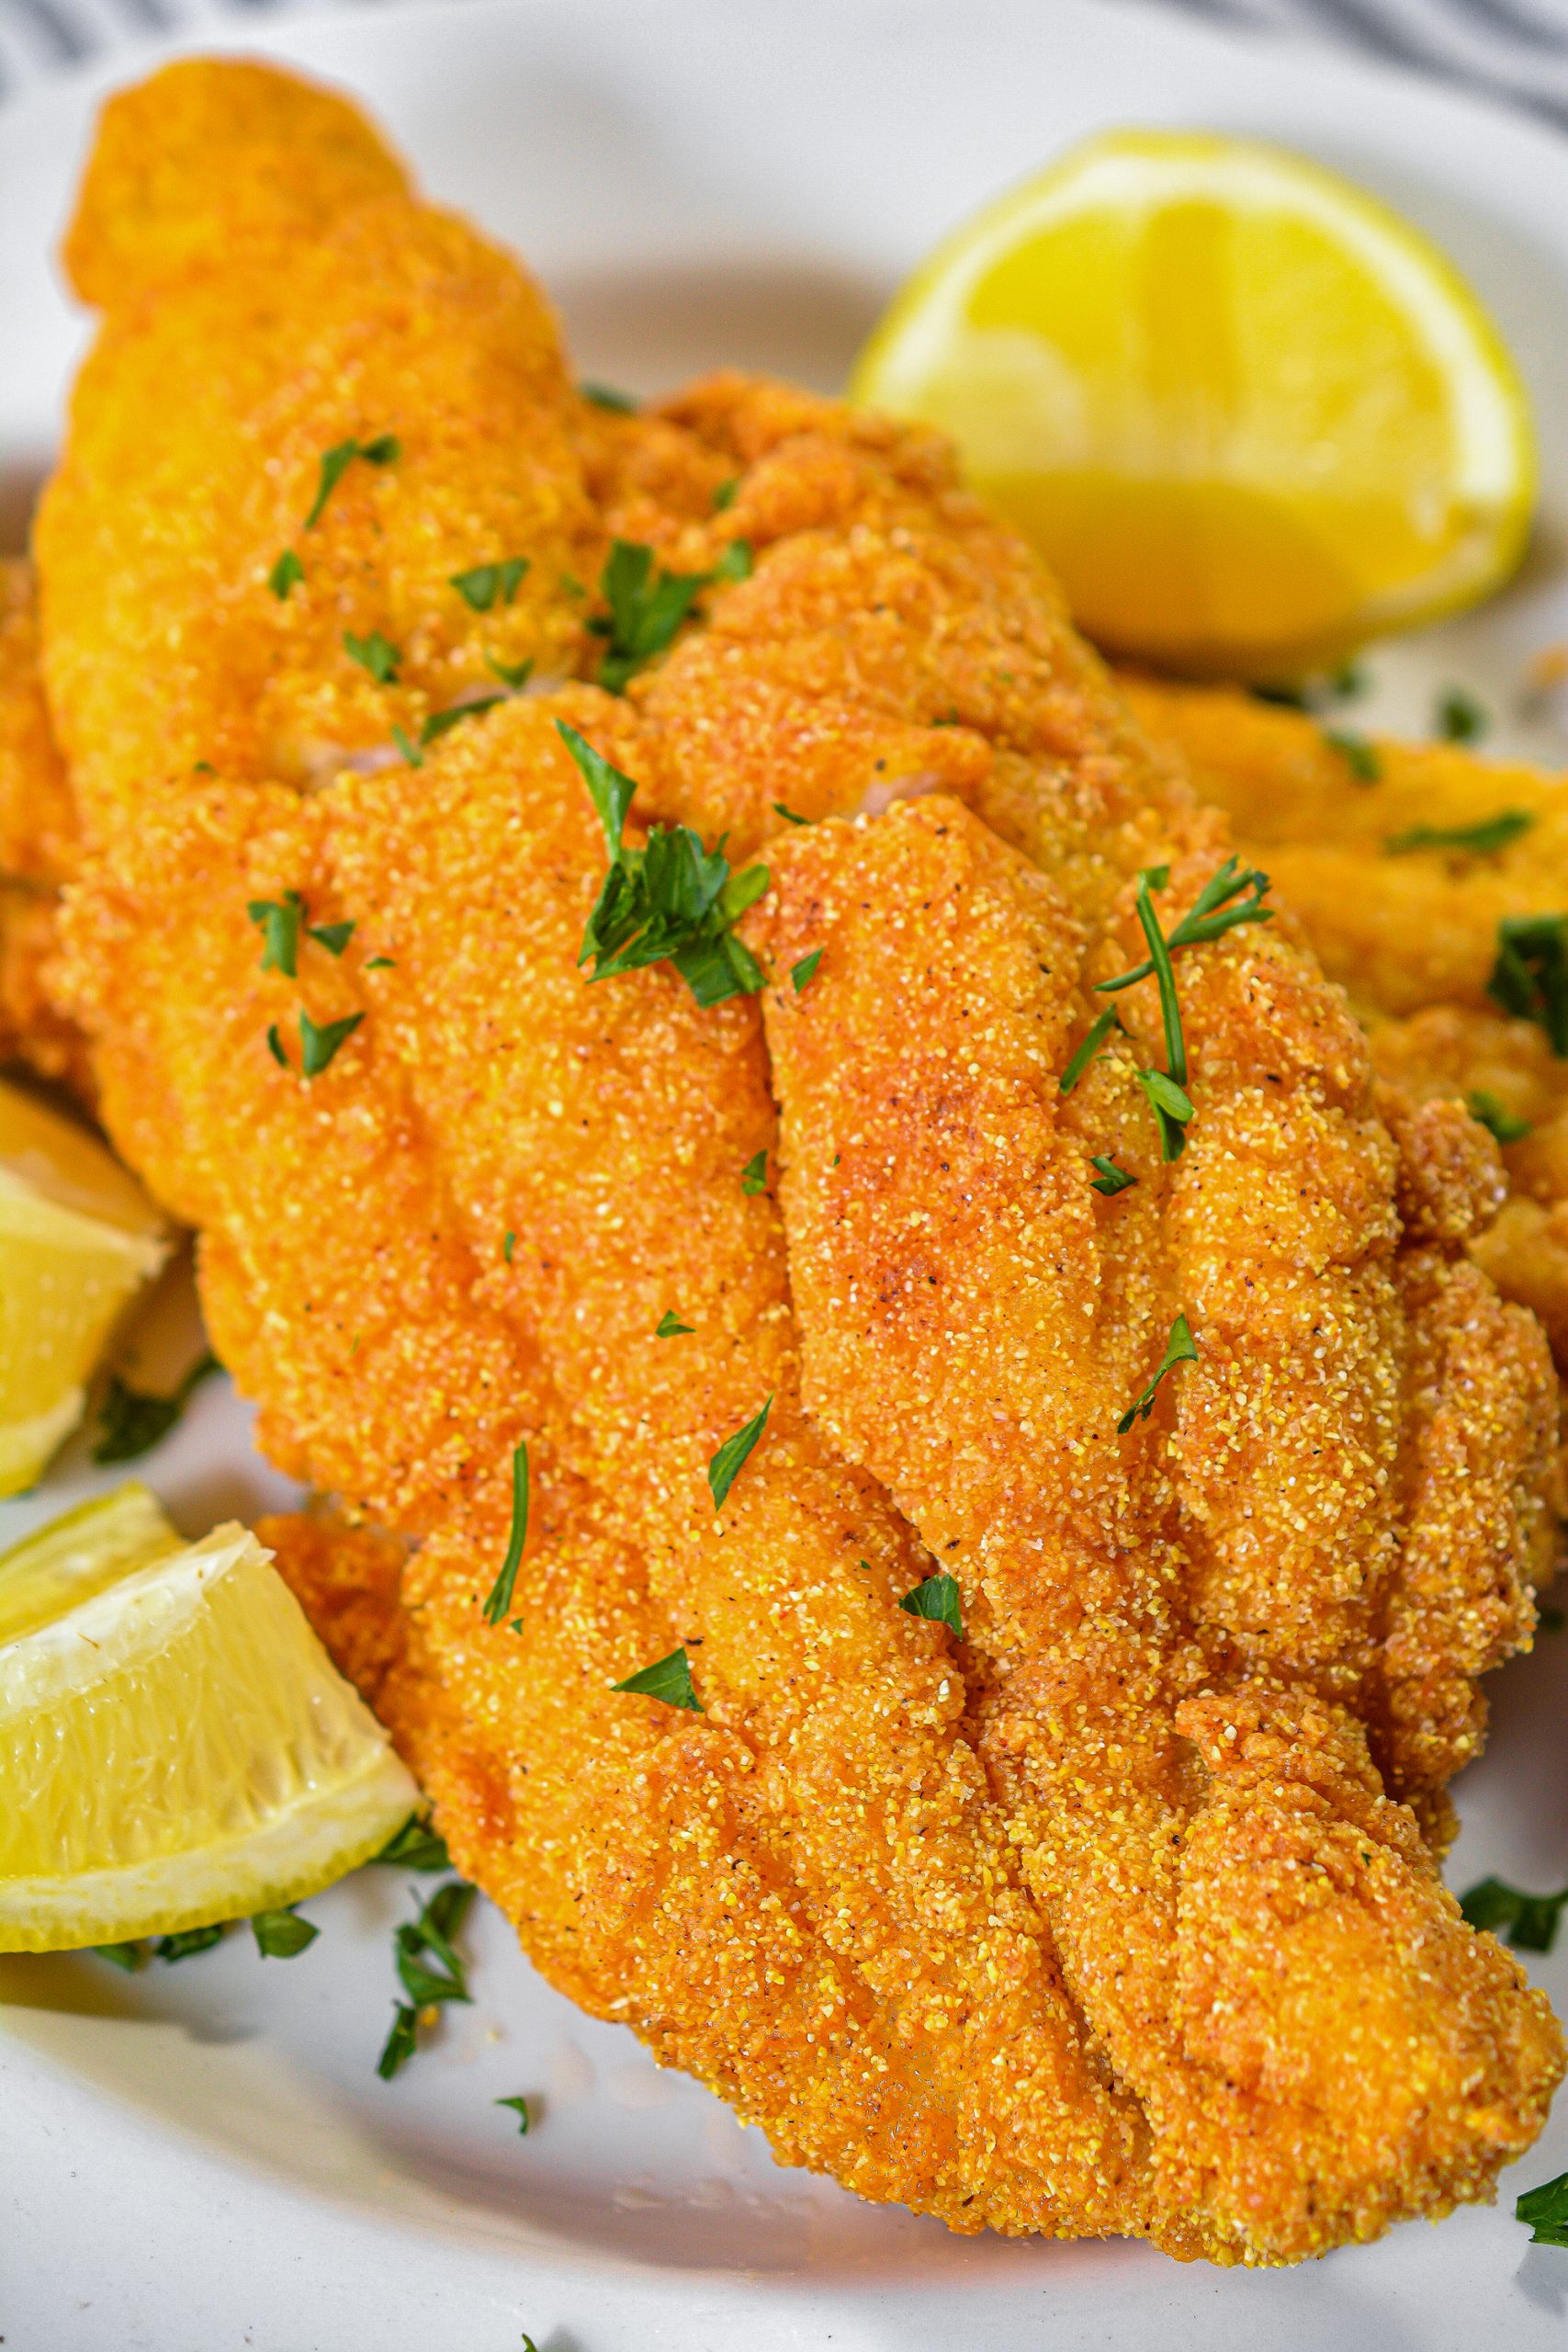 Golden Fried Catfish